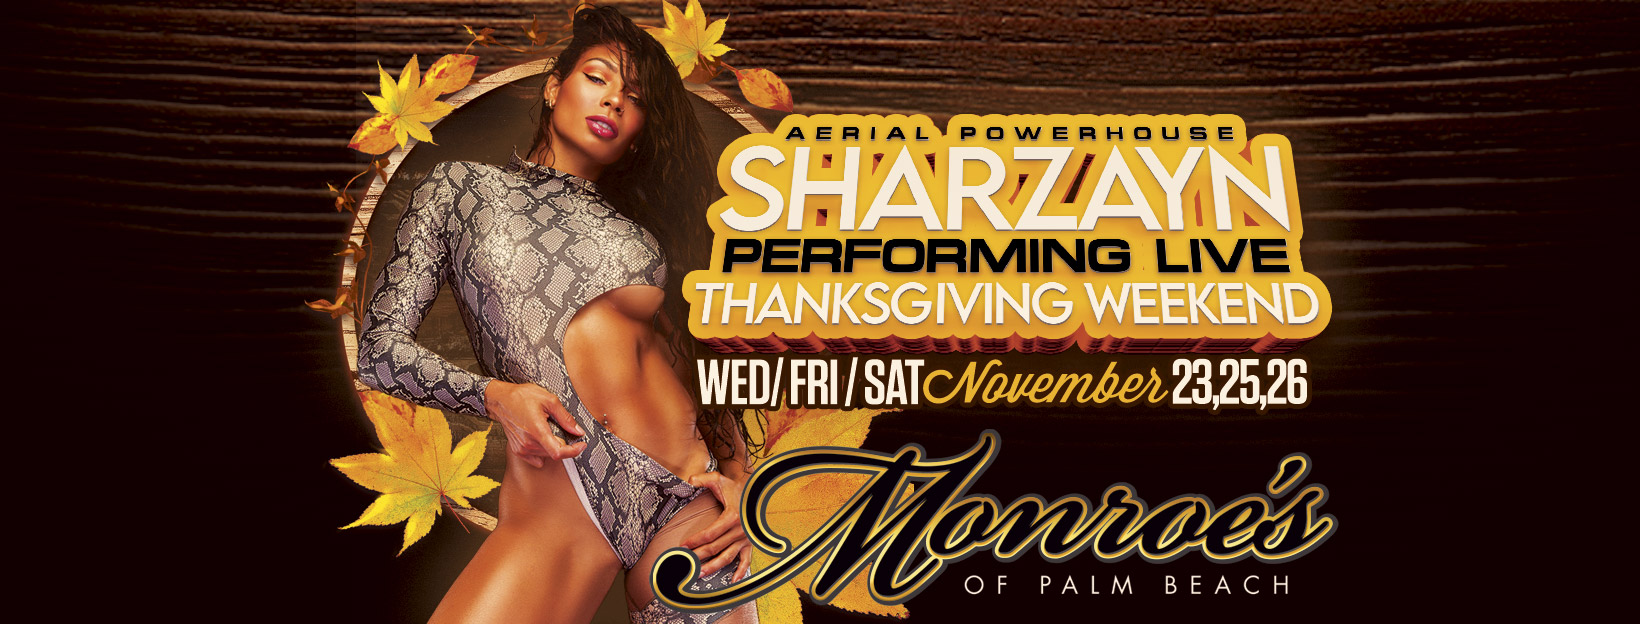 Feature entertainer Sharzayn Monroe's Palm Beach Thanksgiving Weekend